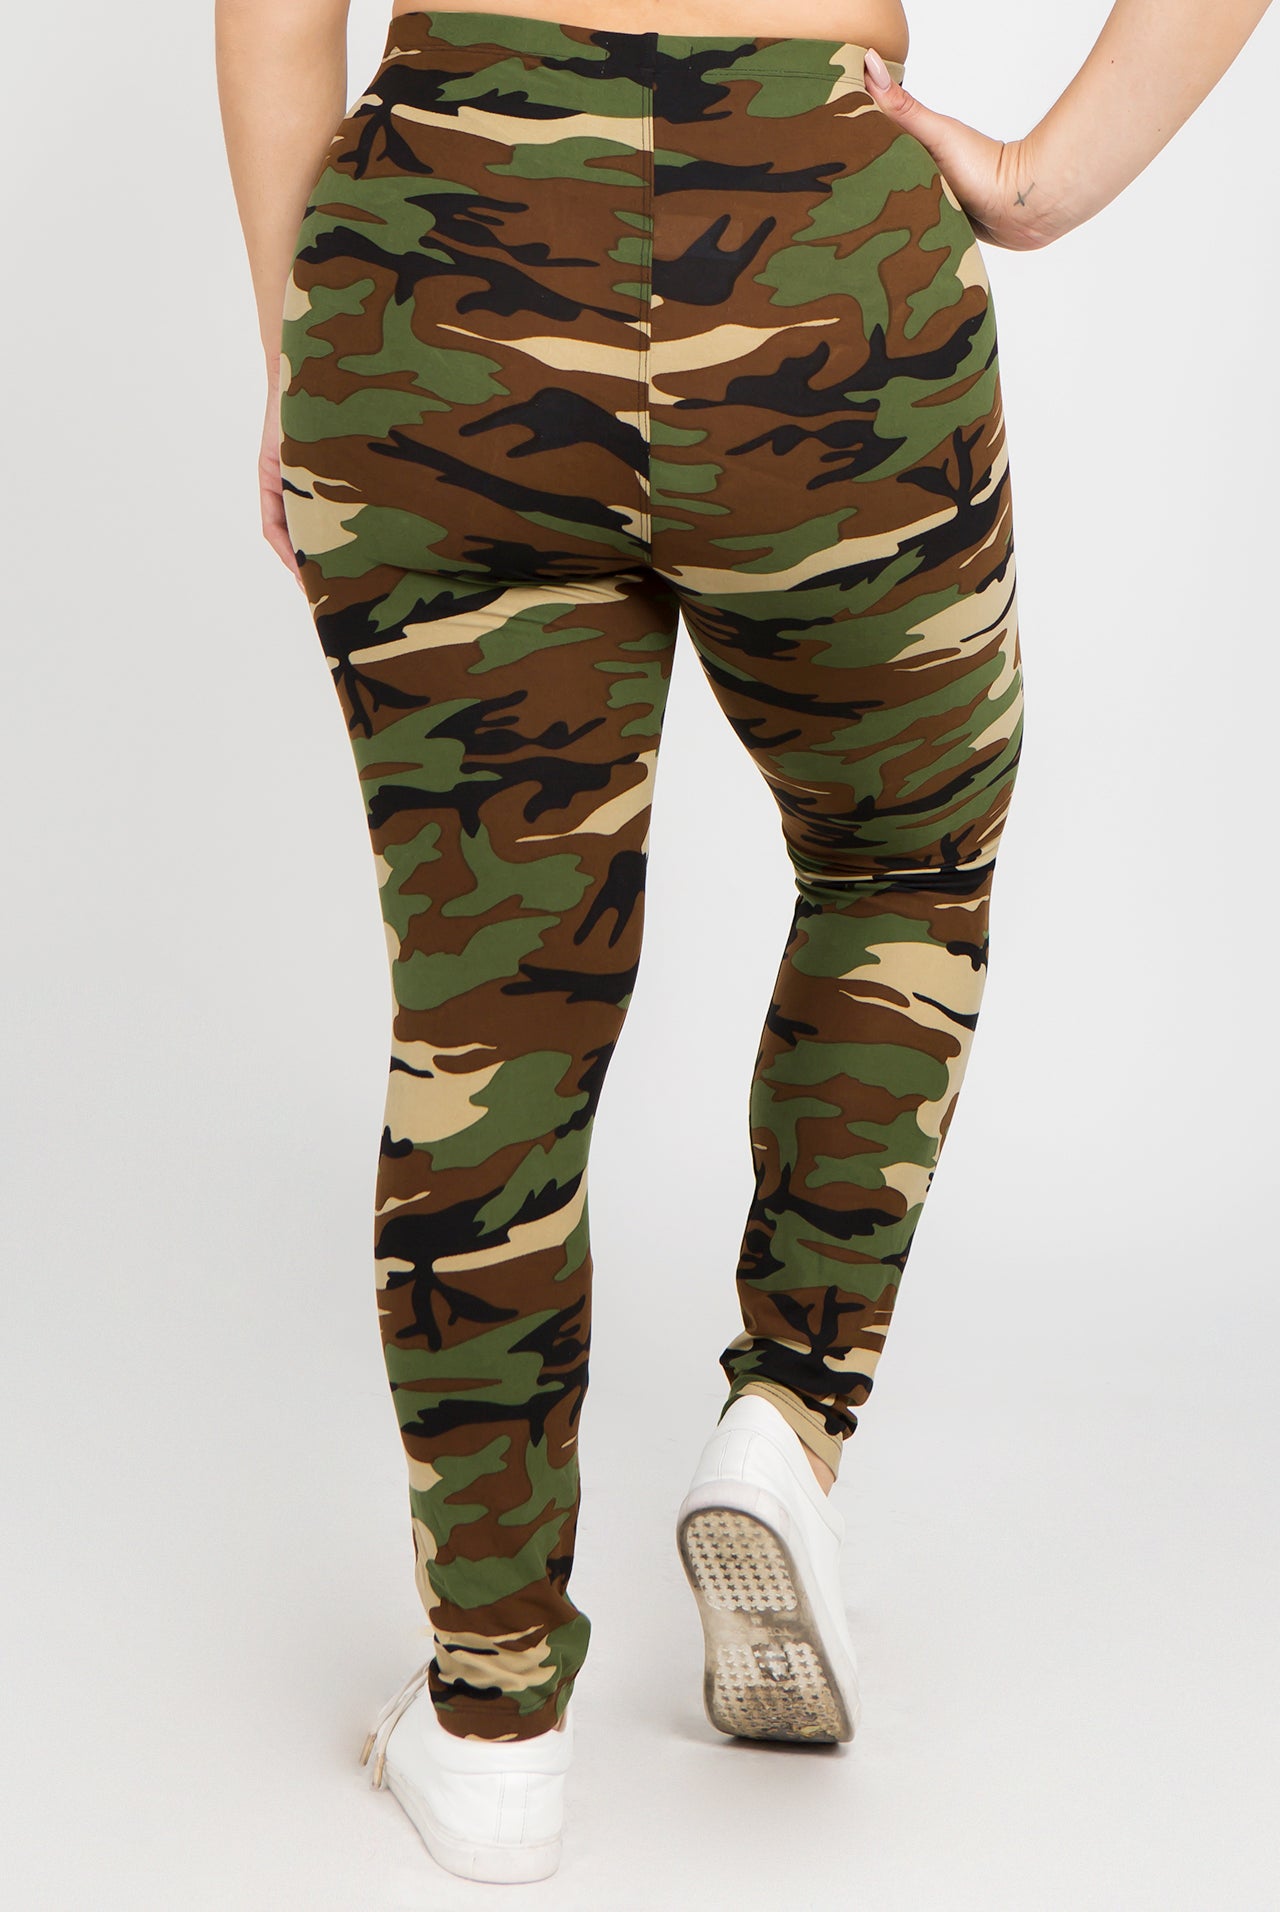 Army Camo Leggings | Camo leggings, Printed leggings outfit, Outfits with  leggings